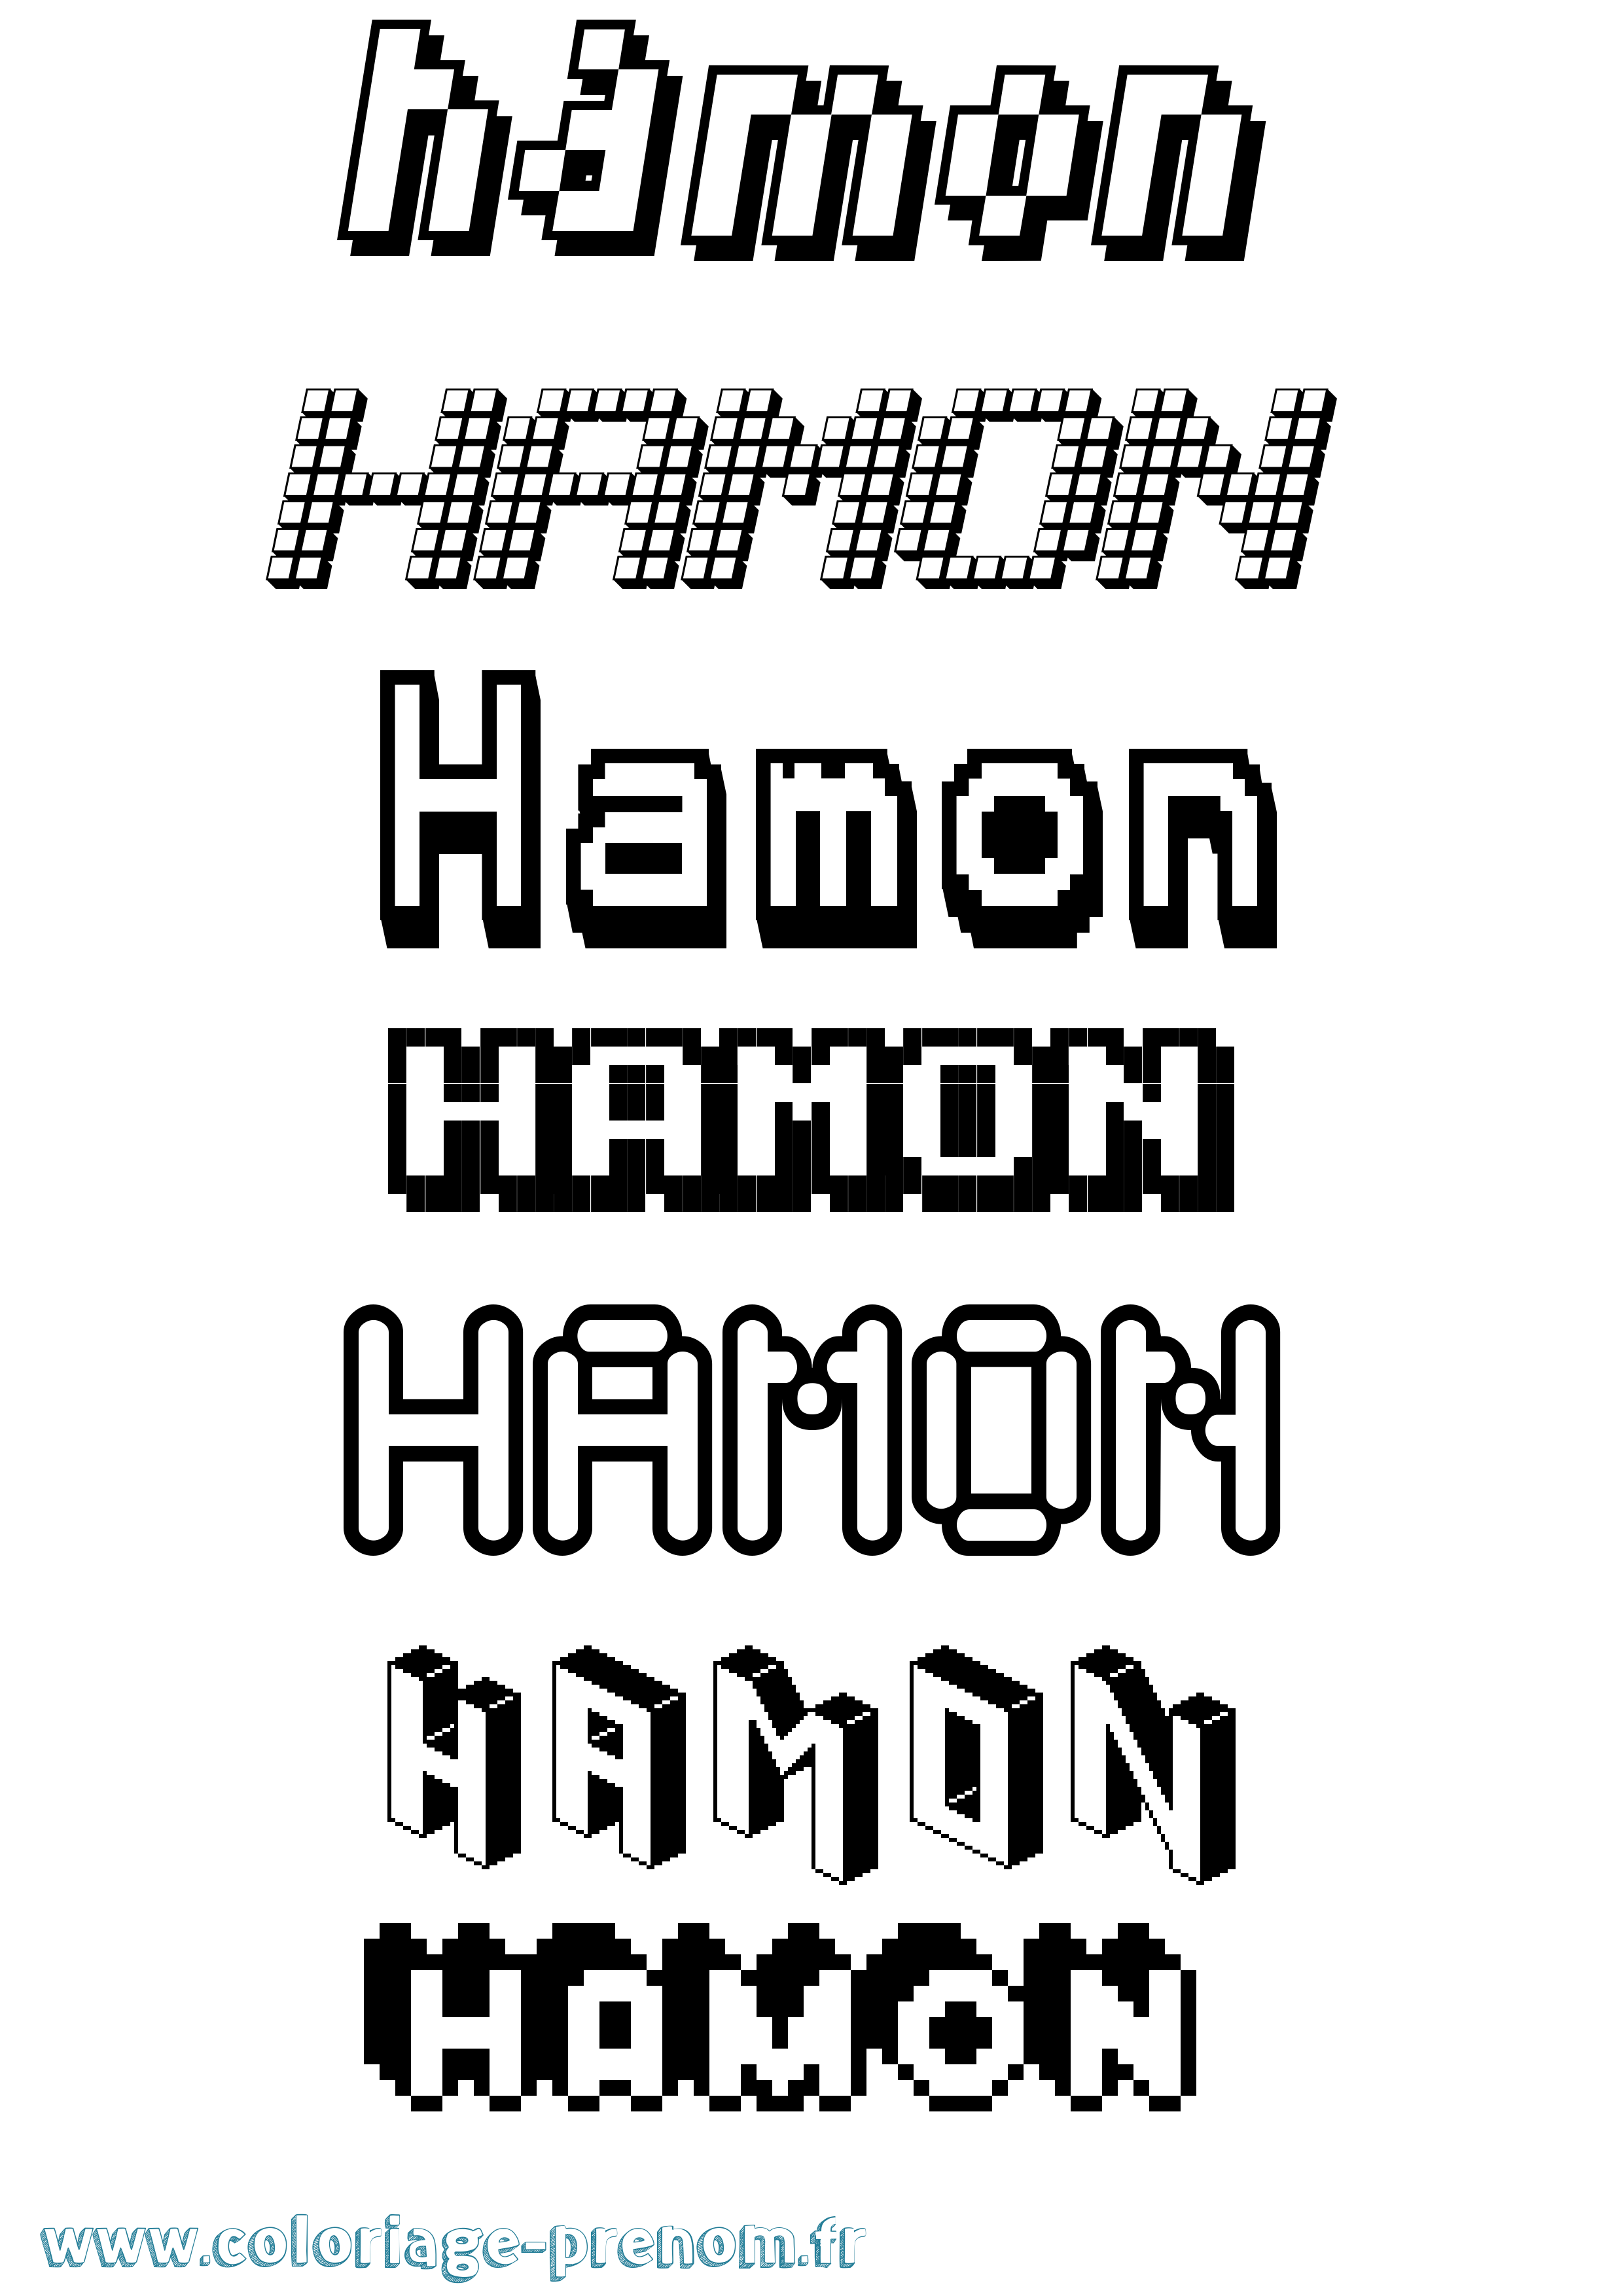 Coloriage prénom Hamon Pixel